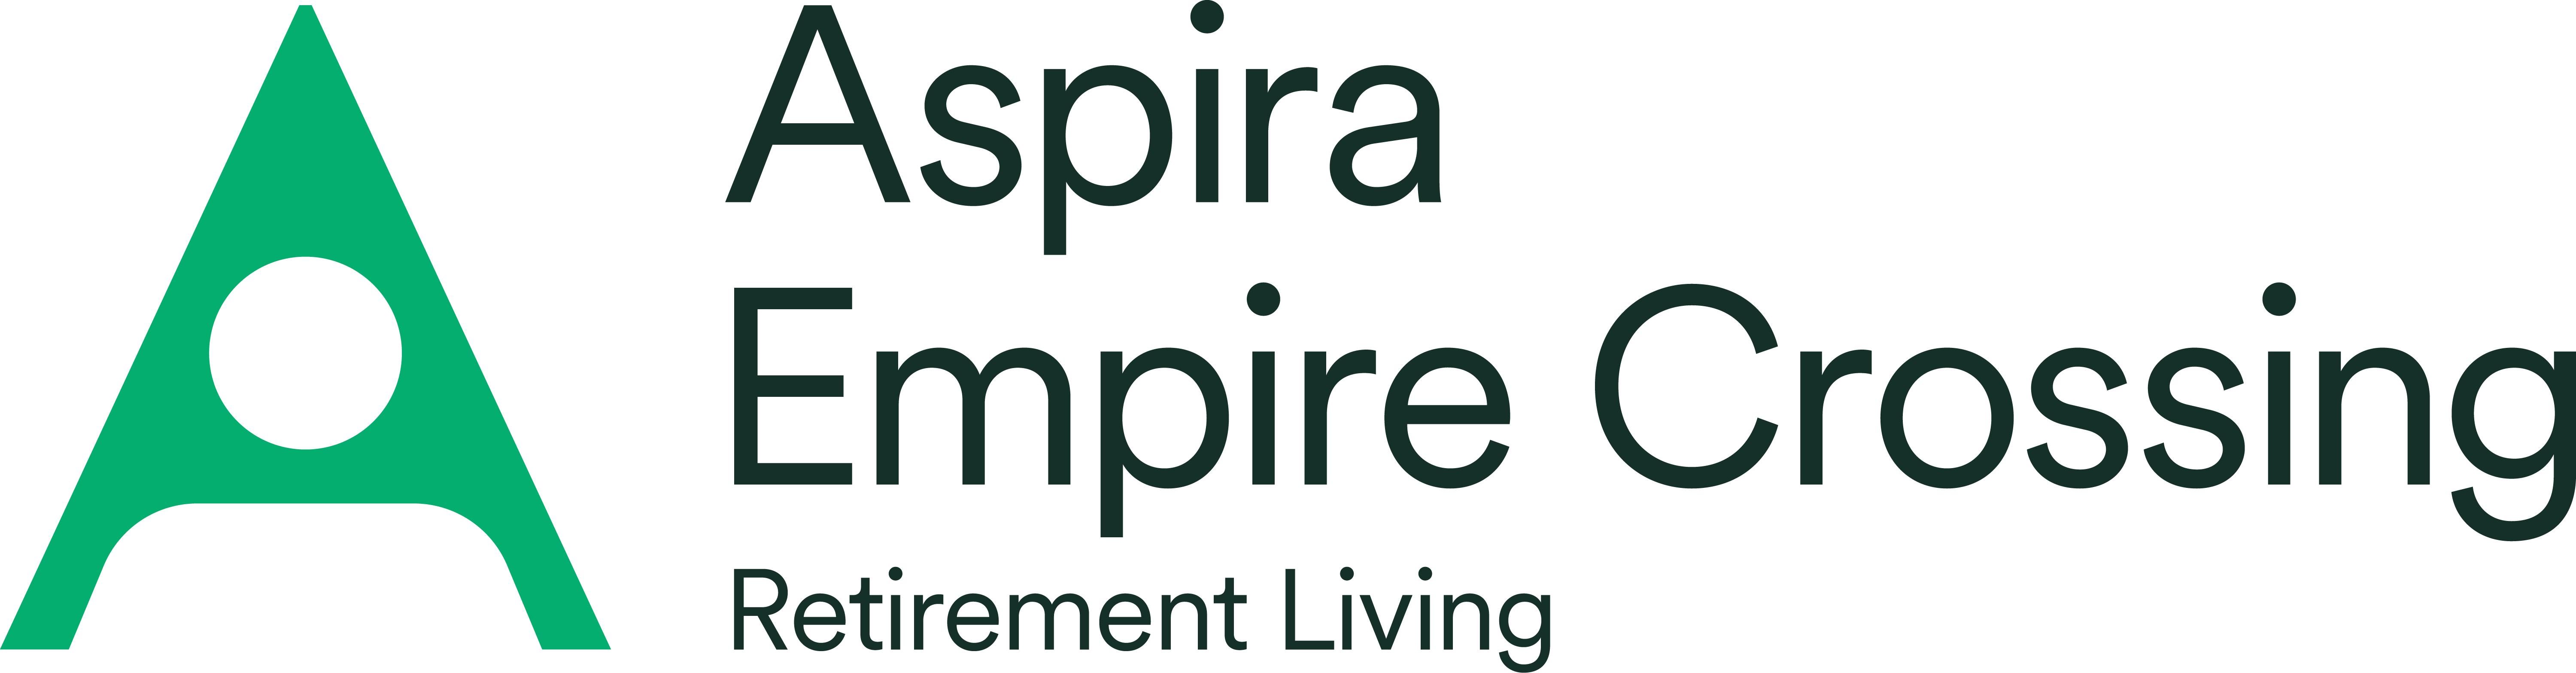 Aspira-logo-Empire_Crossing